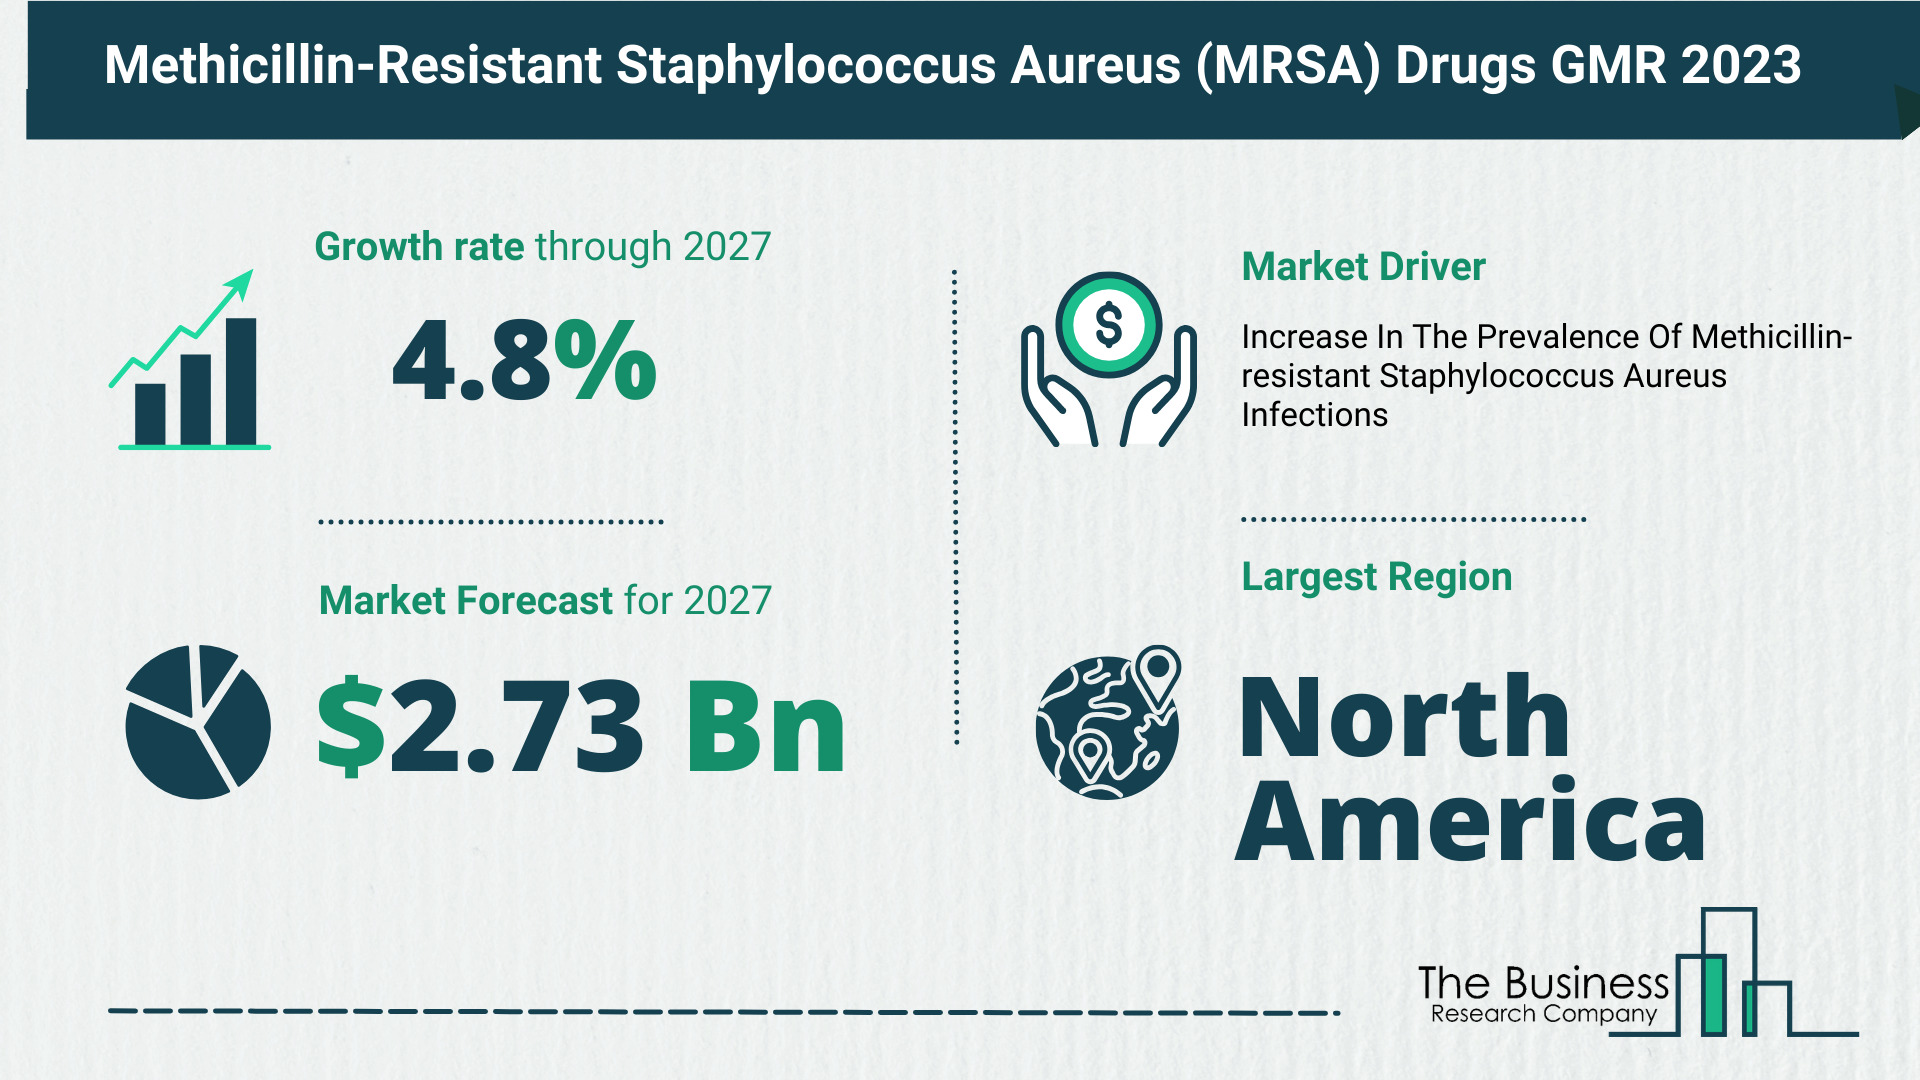 Methicillin-Resistant Staphylococcus Aureus (MRSA) Drugs Market Forecast 2023: Forecast Market Size, Drivers And Key Segments